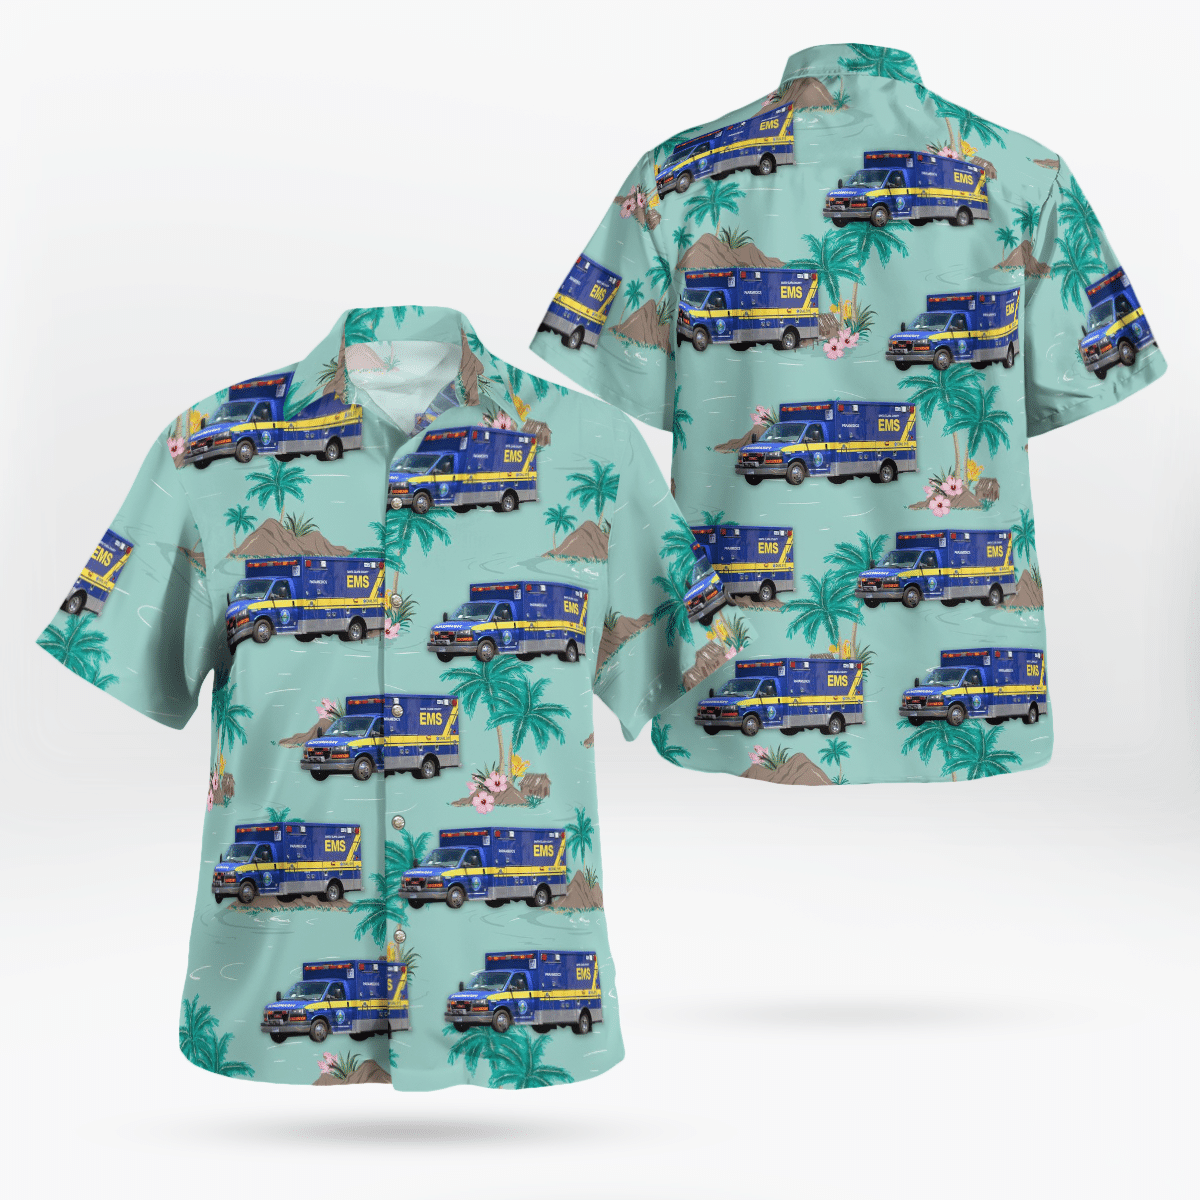 Listed below are some High-quality Aloha Shirt 409